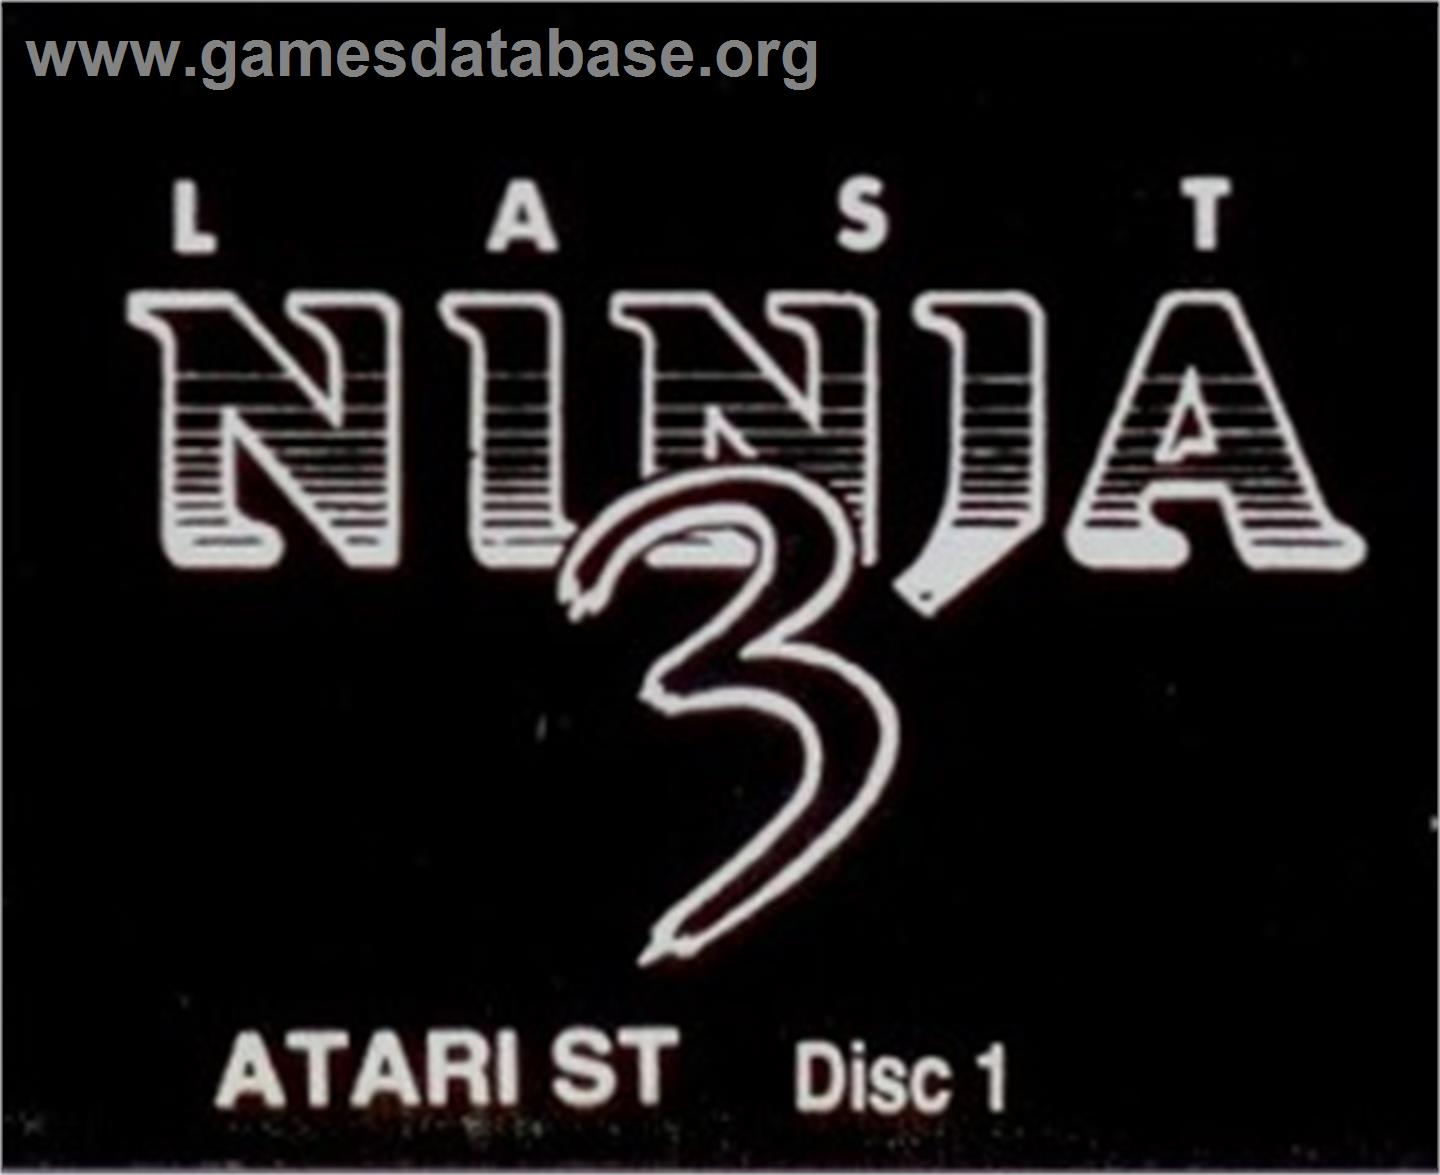 Last Ninja 3 - Atari ST - Artwork - Cartridge Top